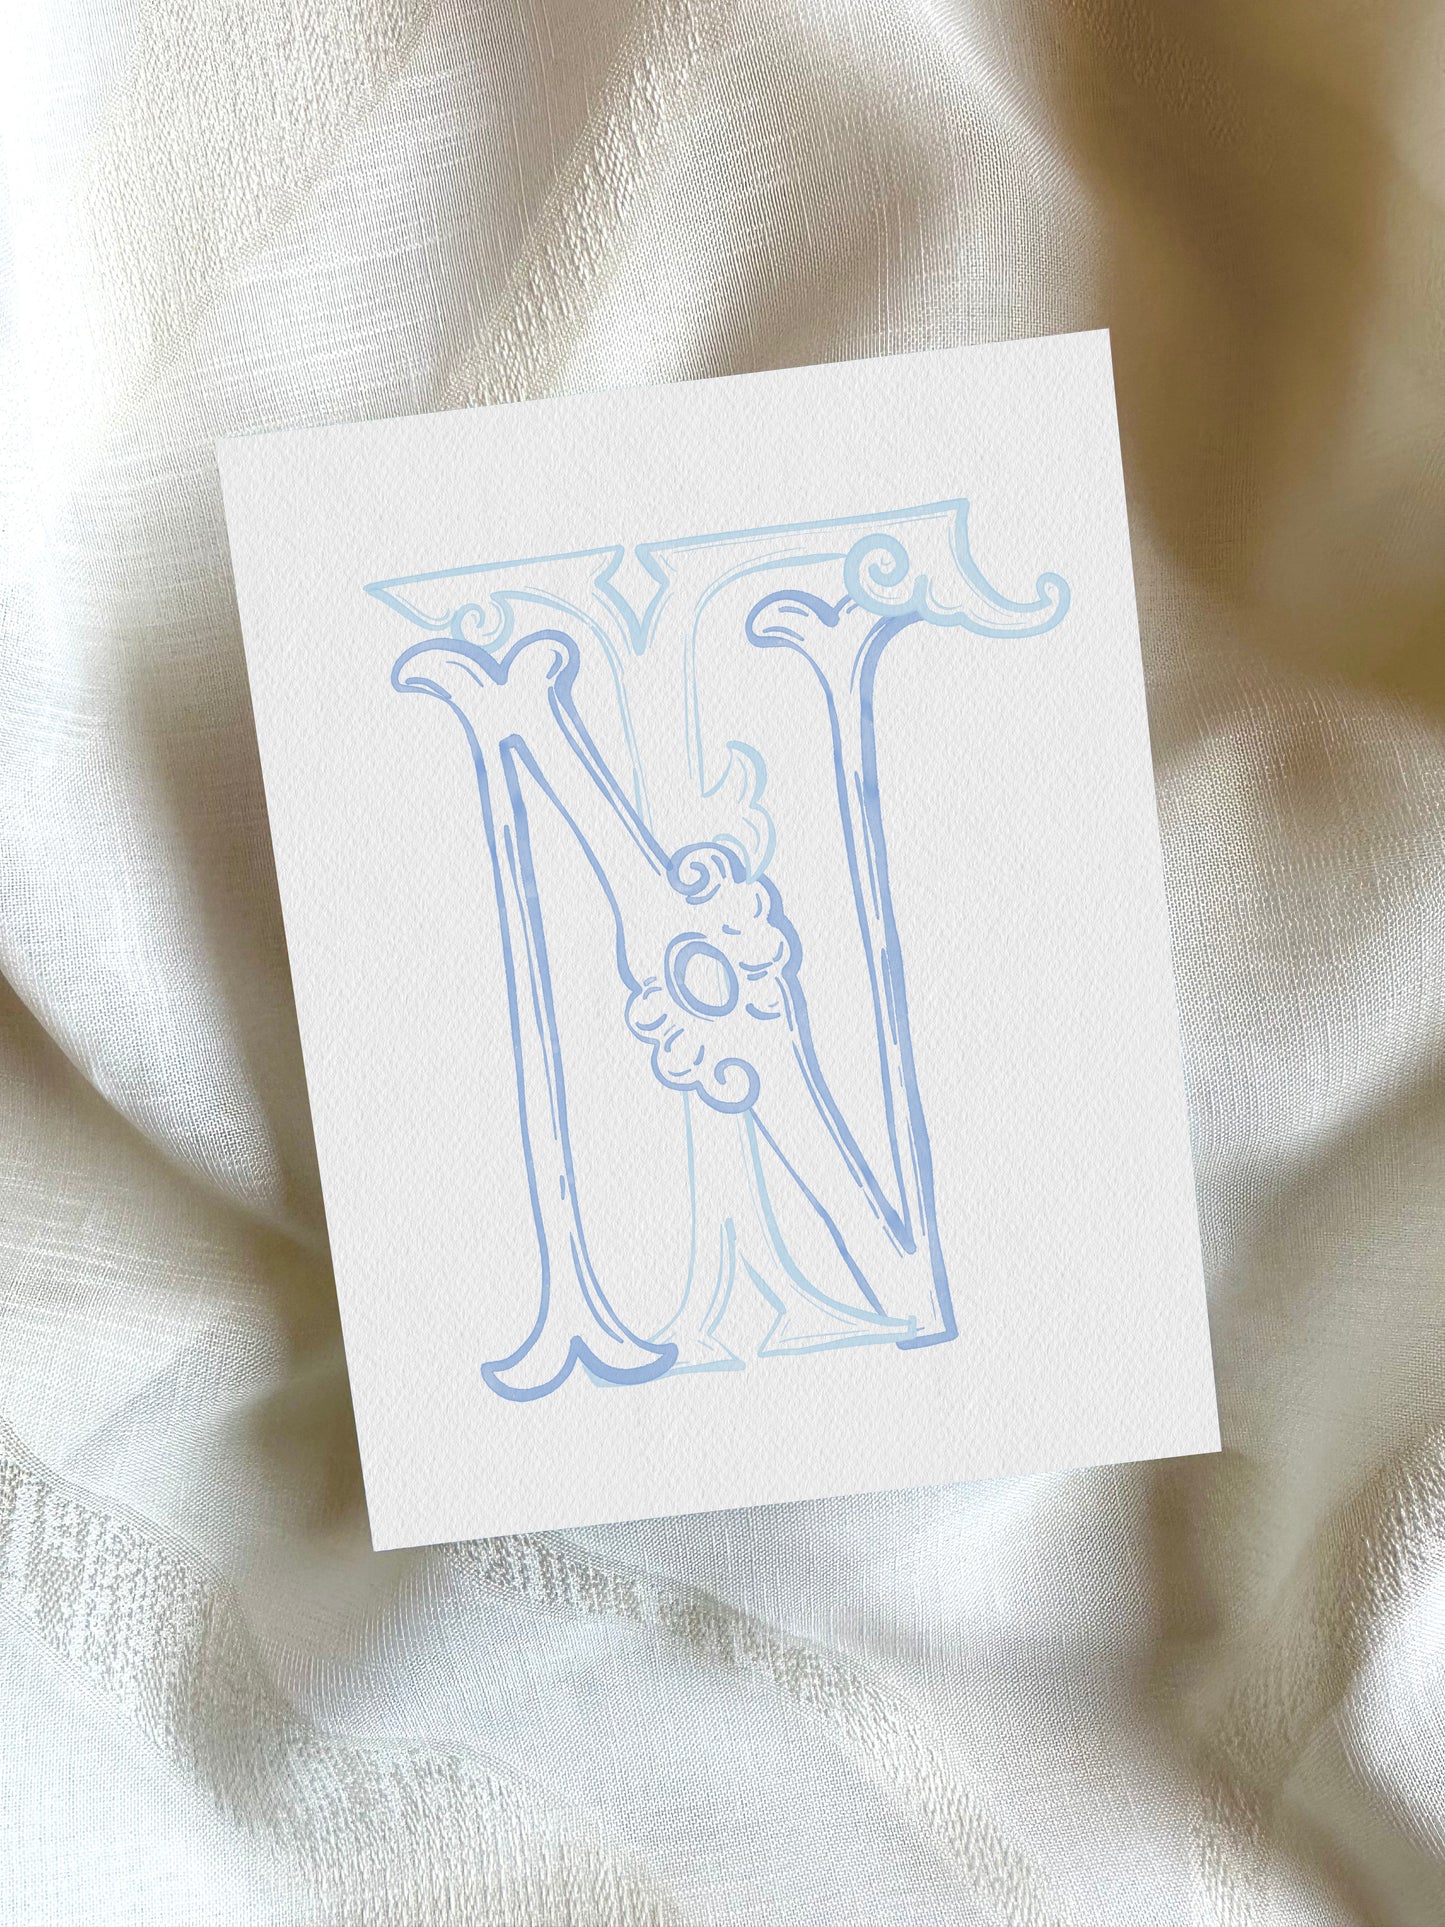 2 Letter Monogram with Letters FN NF | Digital Download - Wedding Monogram SVG, Personal Logo, Wedding Logo for Wedding Invitations The Wedding Crest Lab